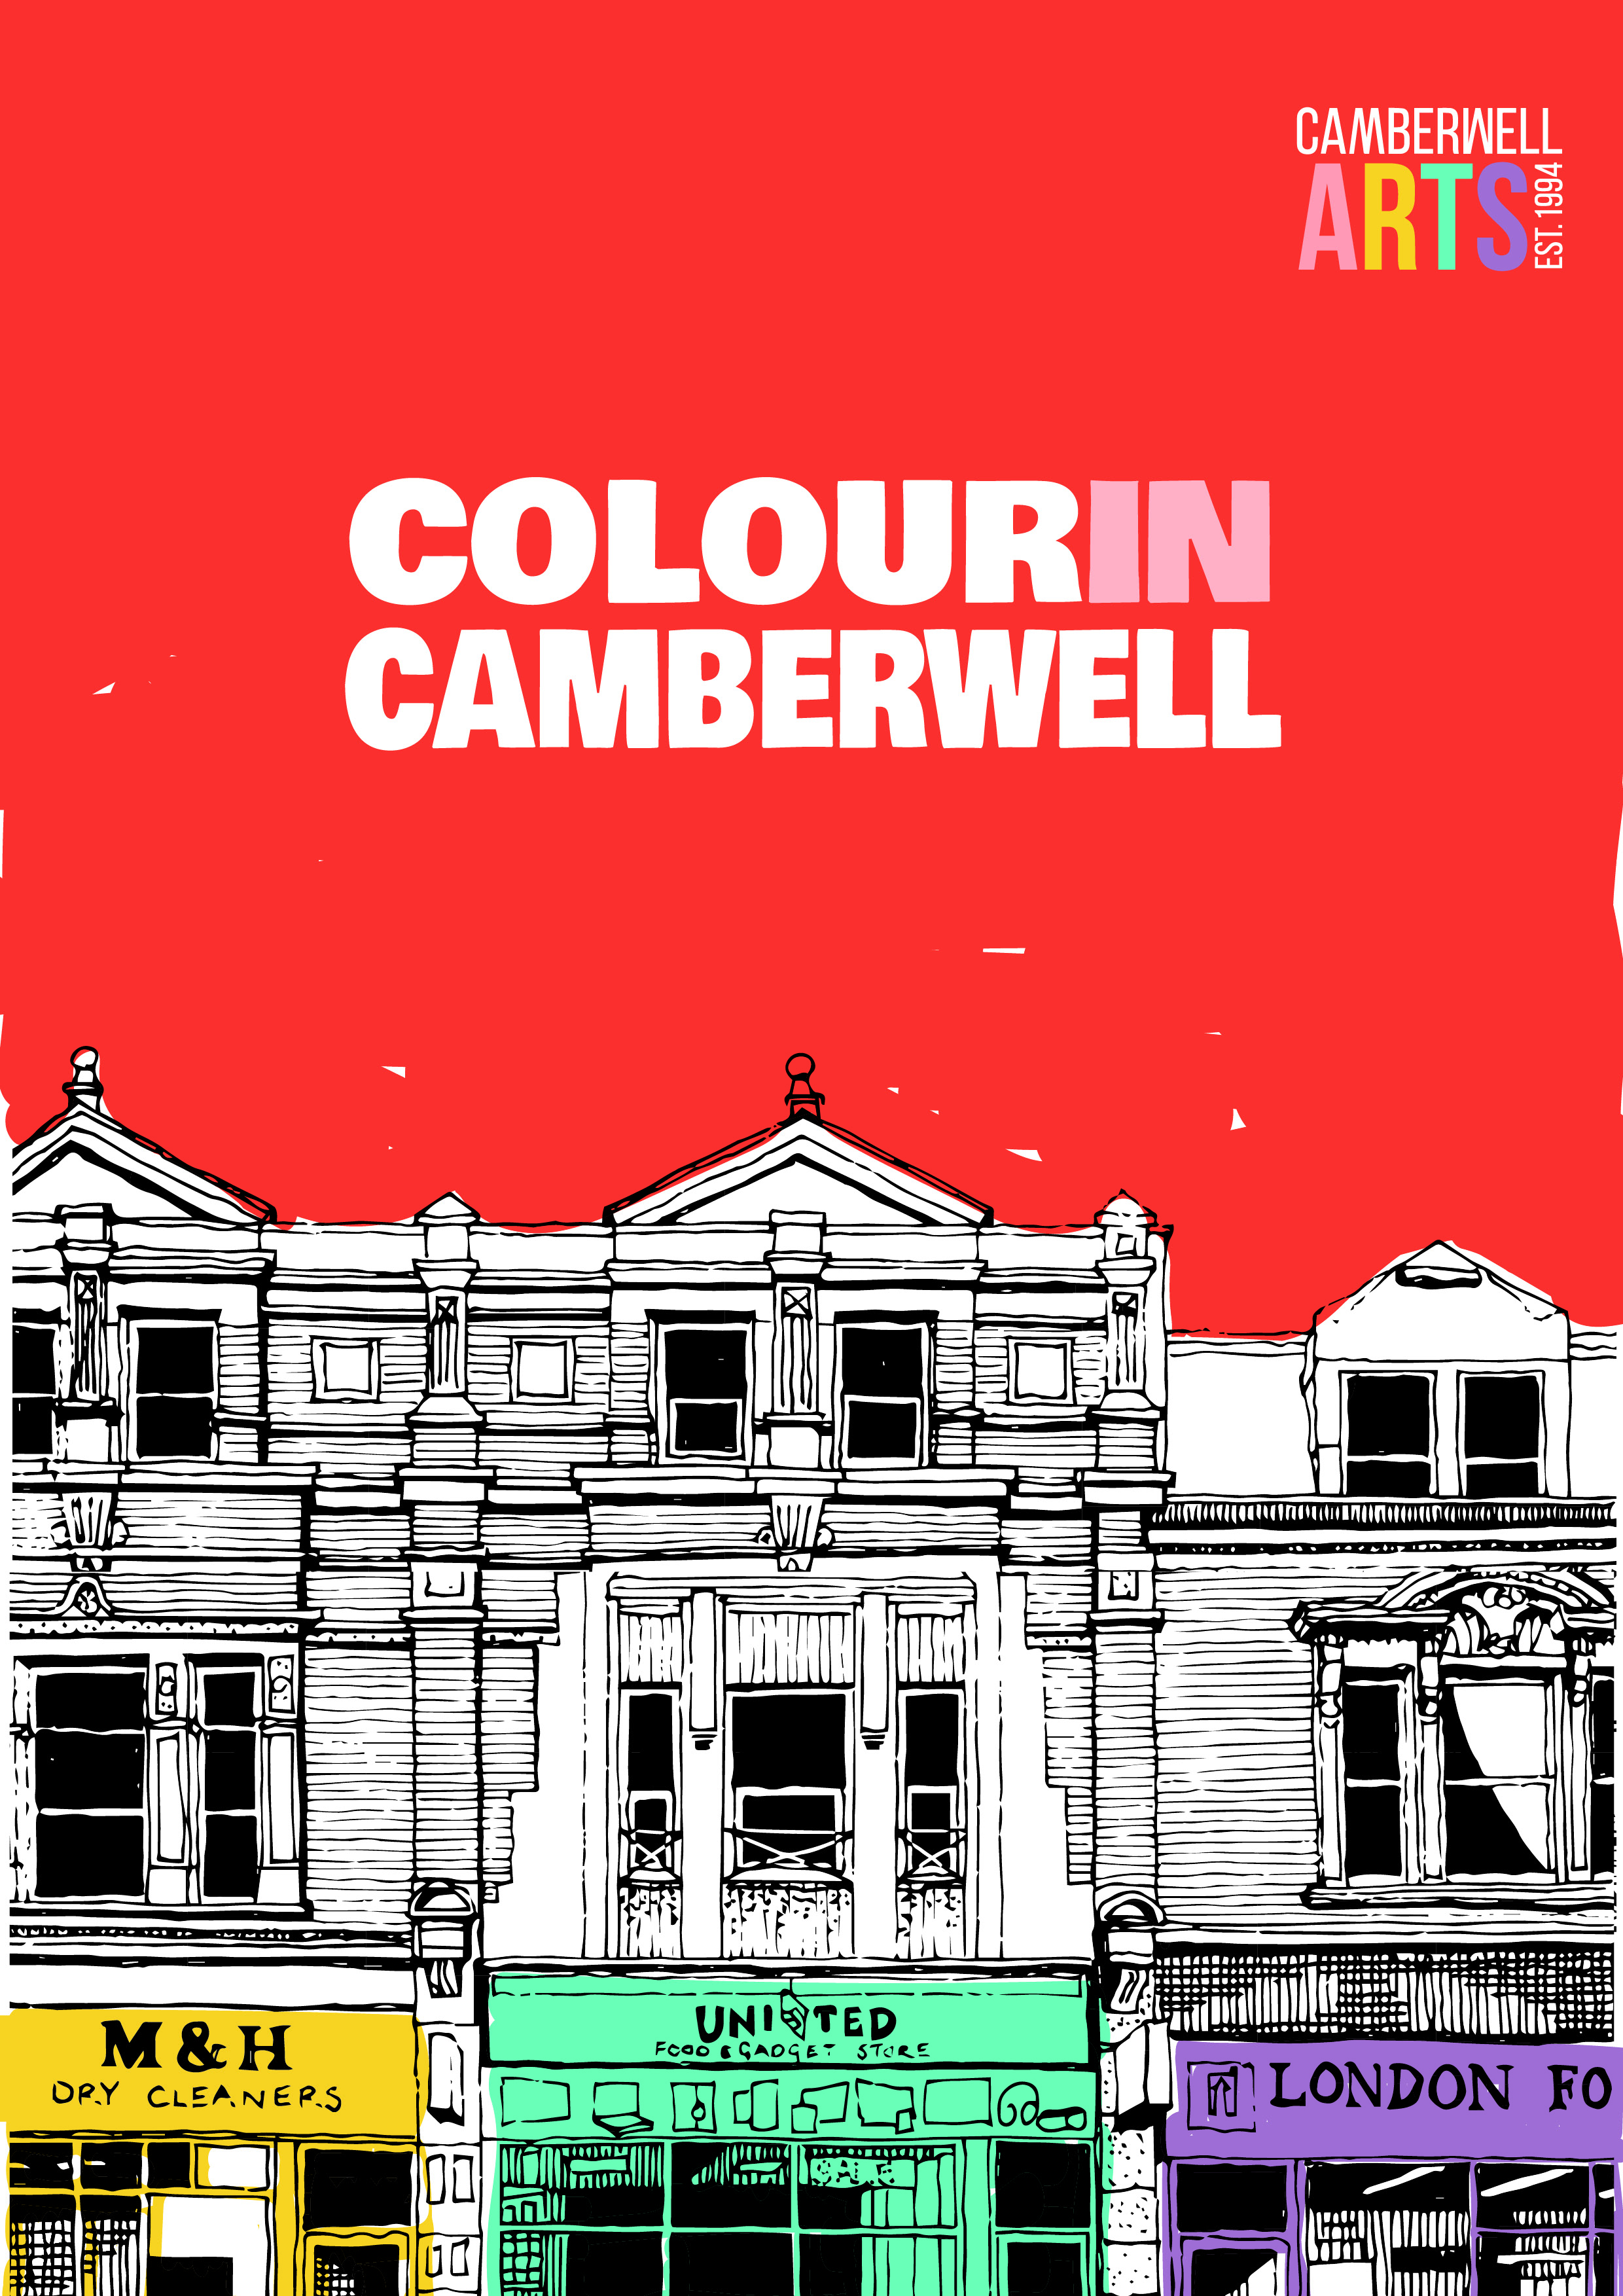 Help to celebrate 25 years of Creative Camberwell